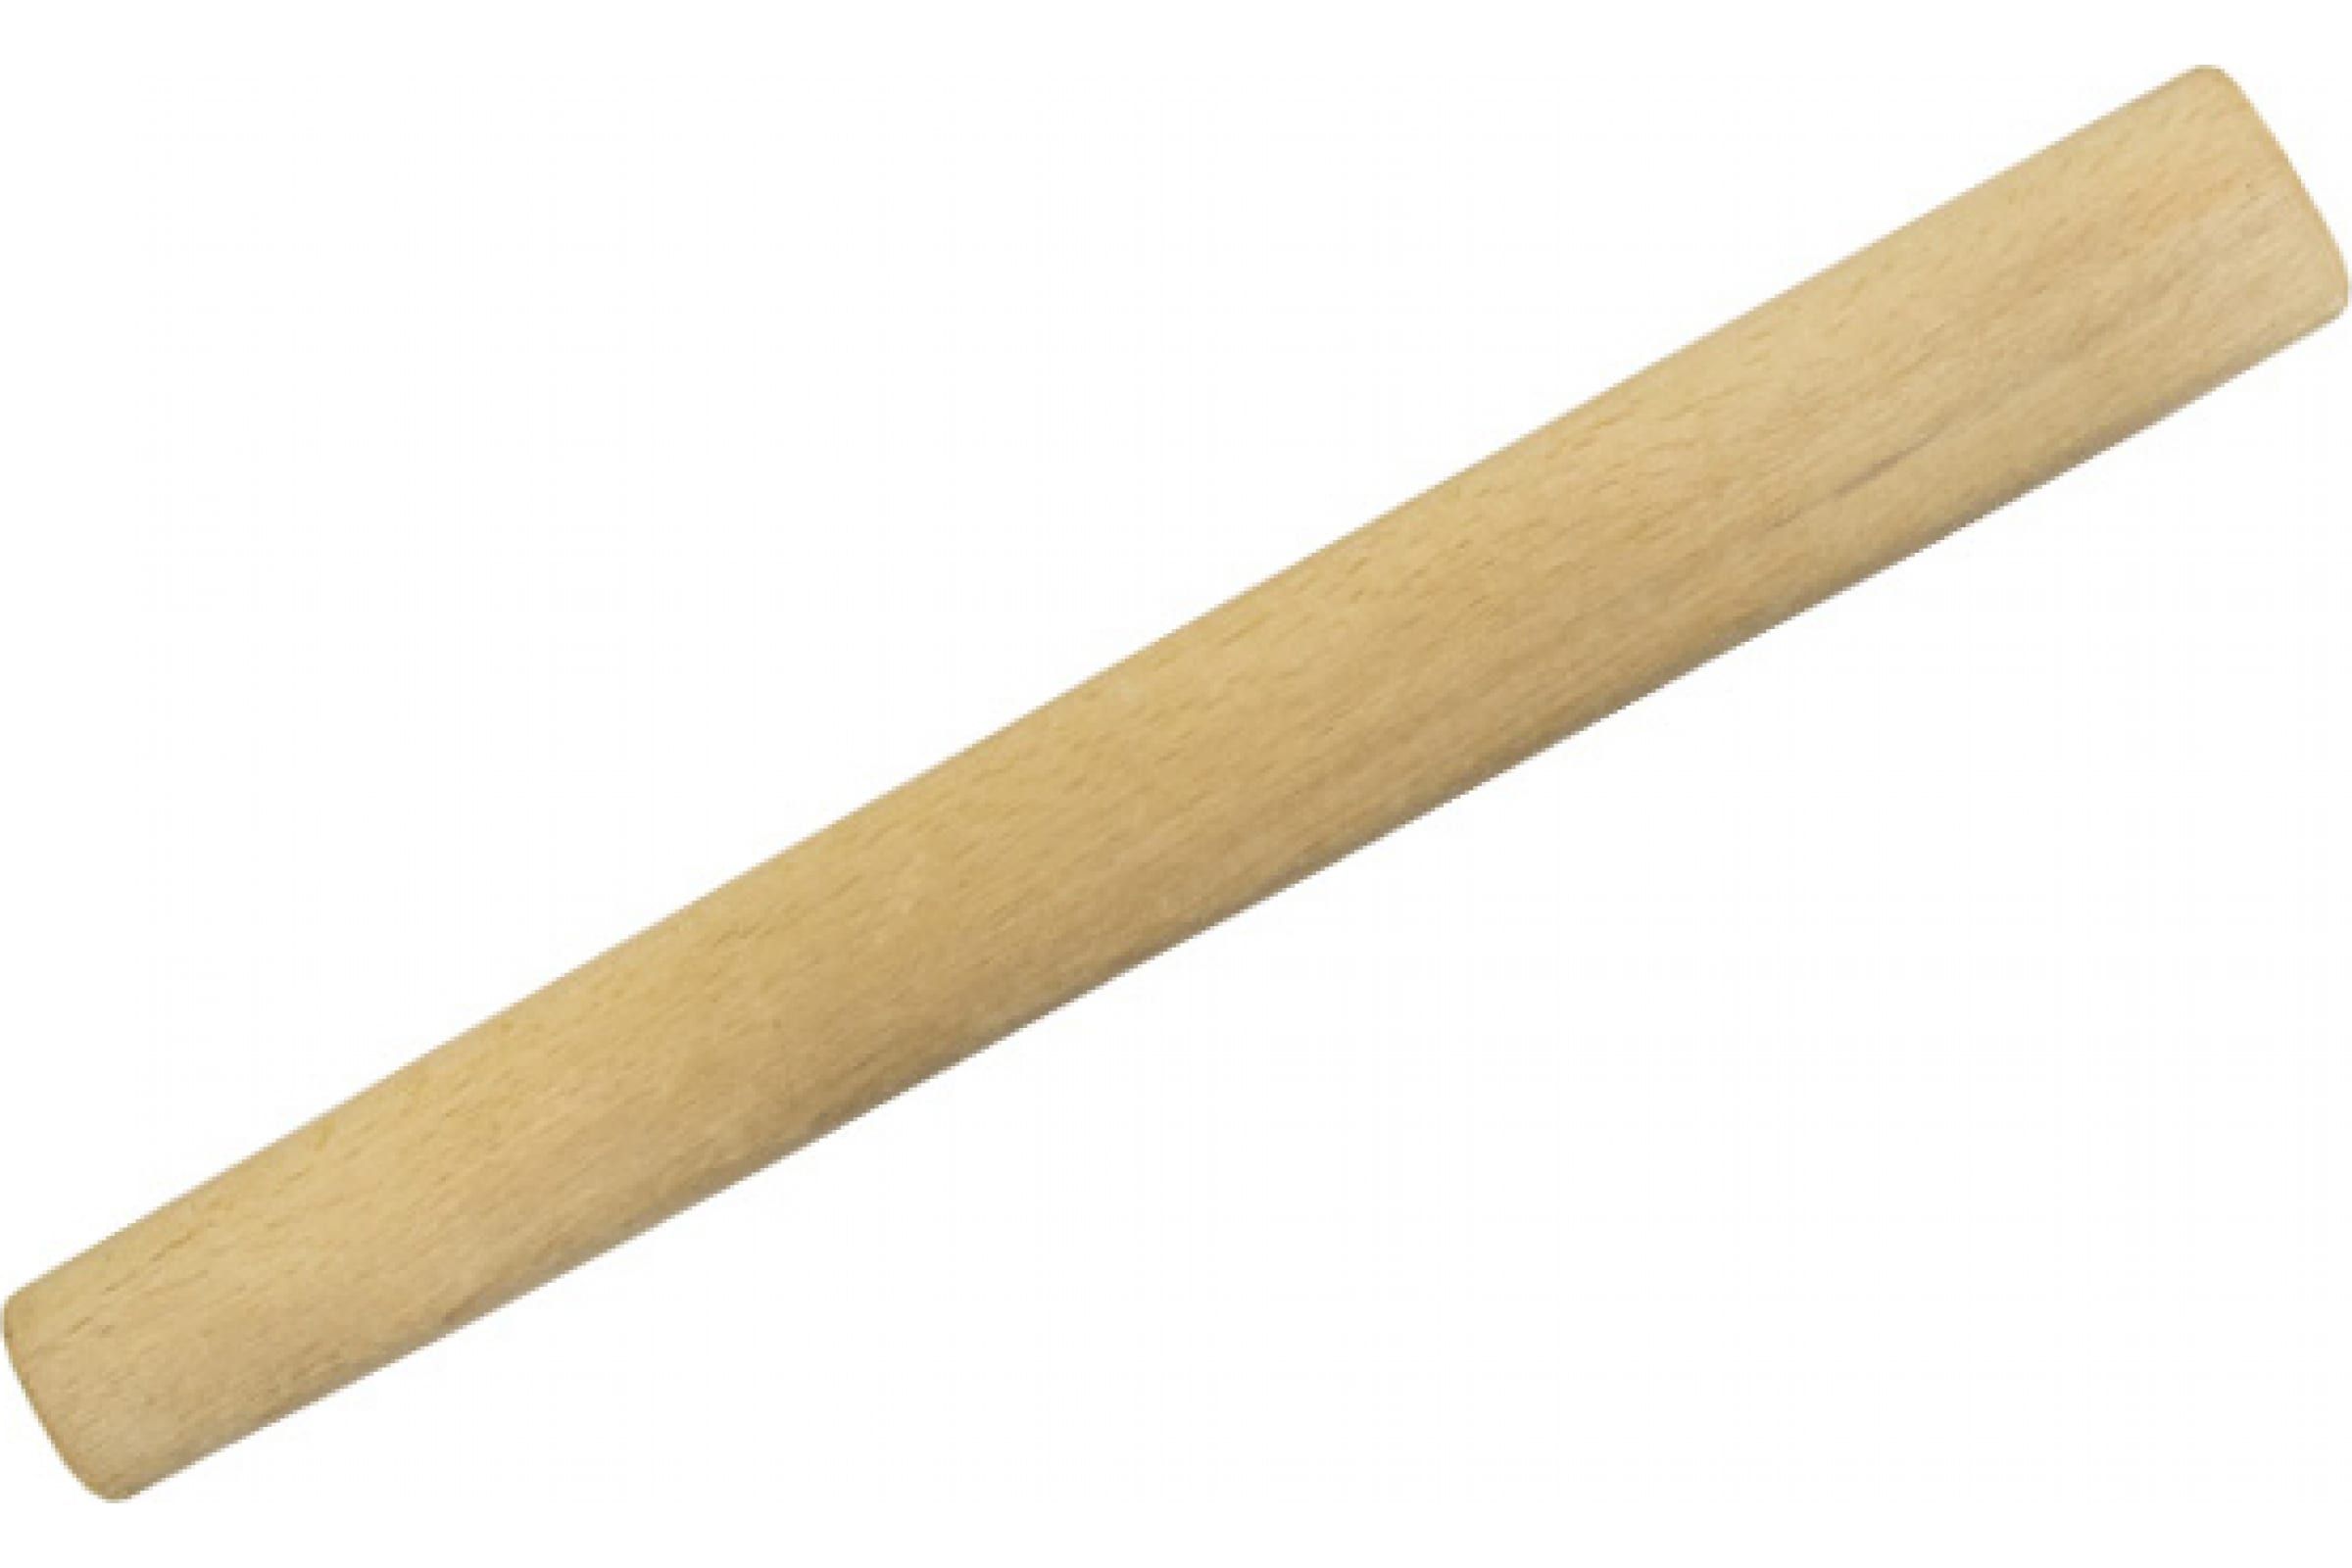 РемоКолор Рукоятка для кувалды бук, 500мм, 39-0-181 деревянная рукоятка для кувалды ремоколор